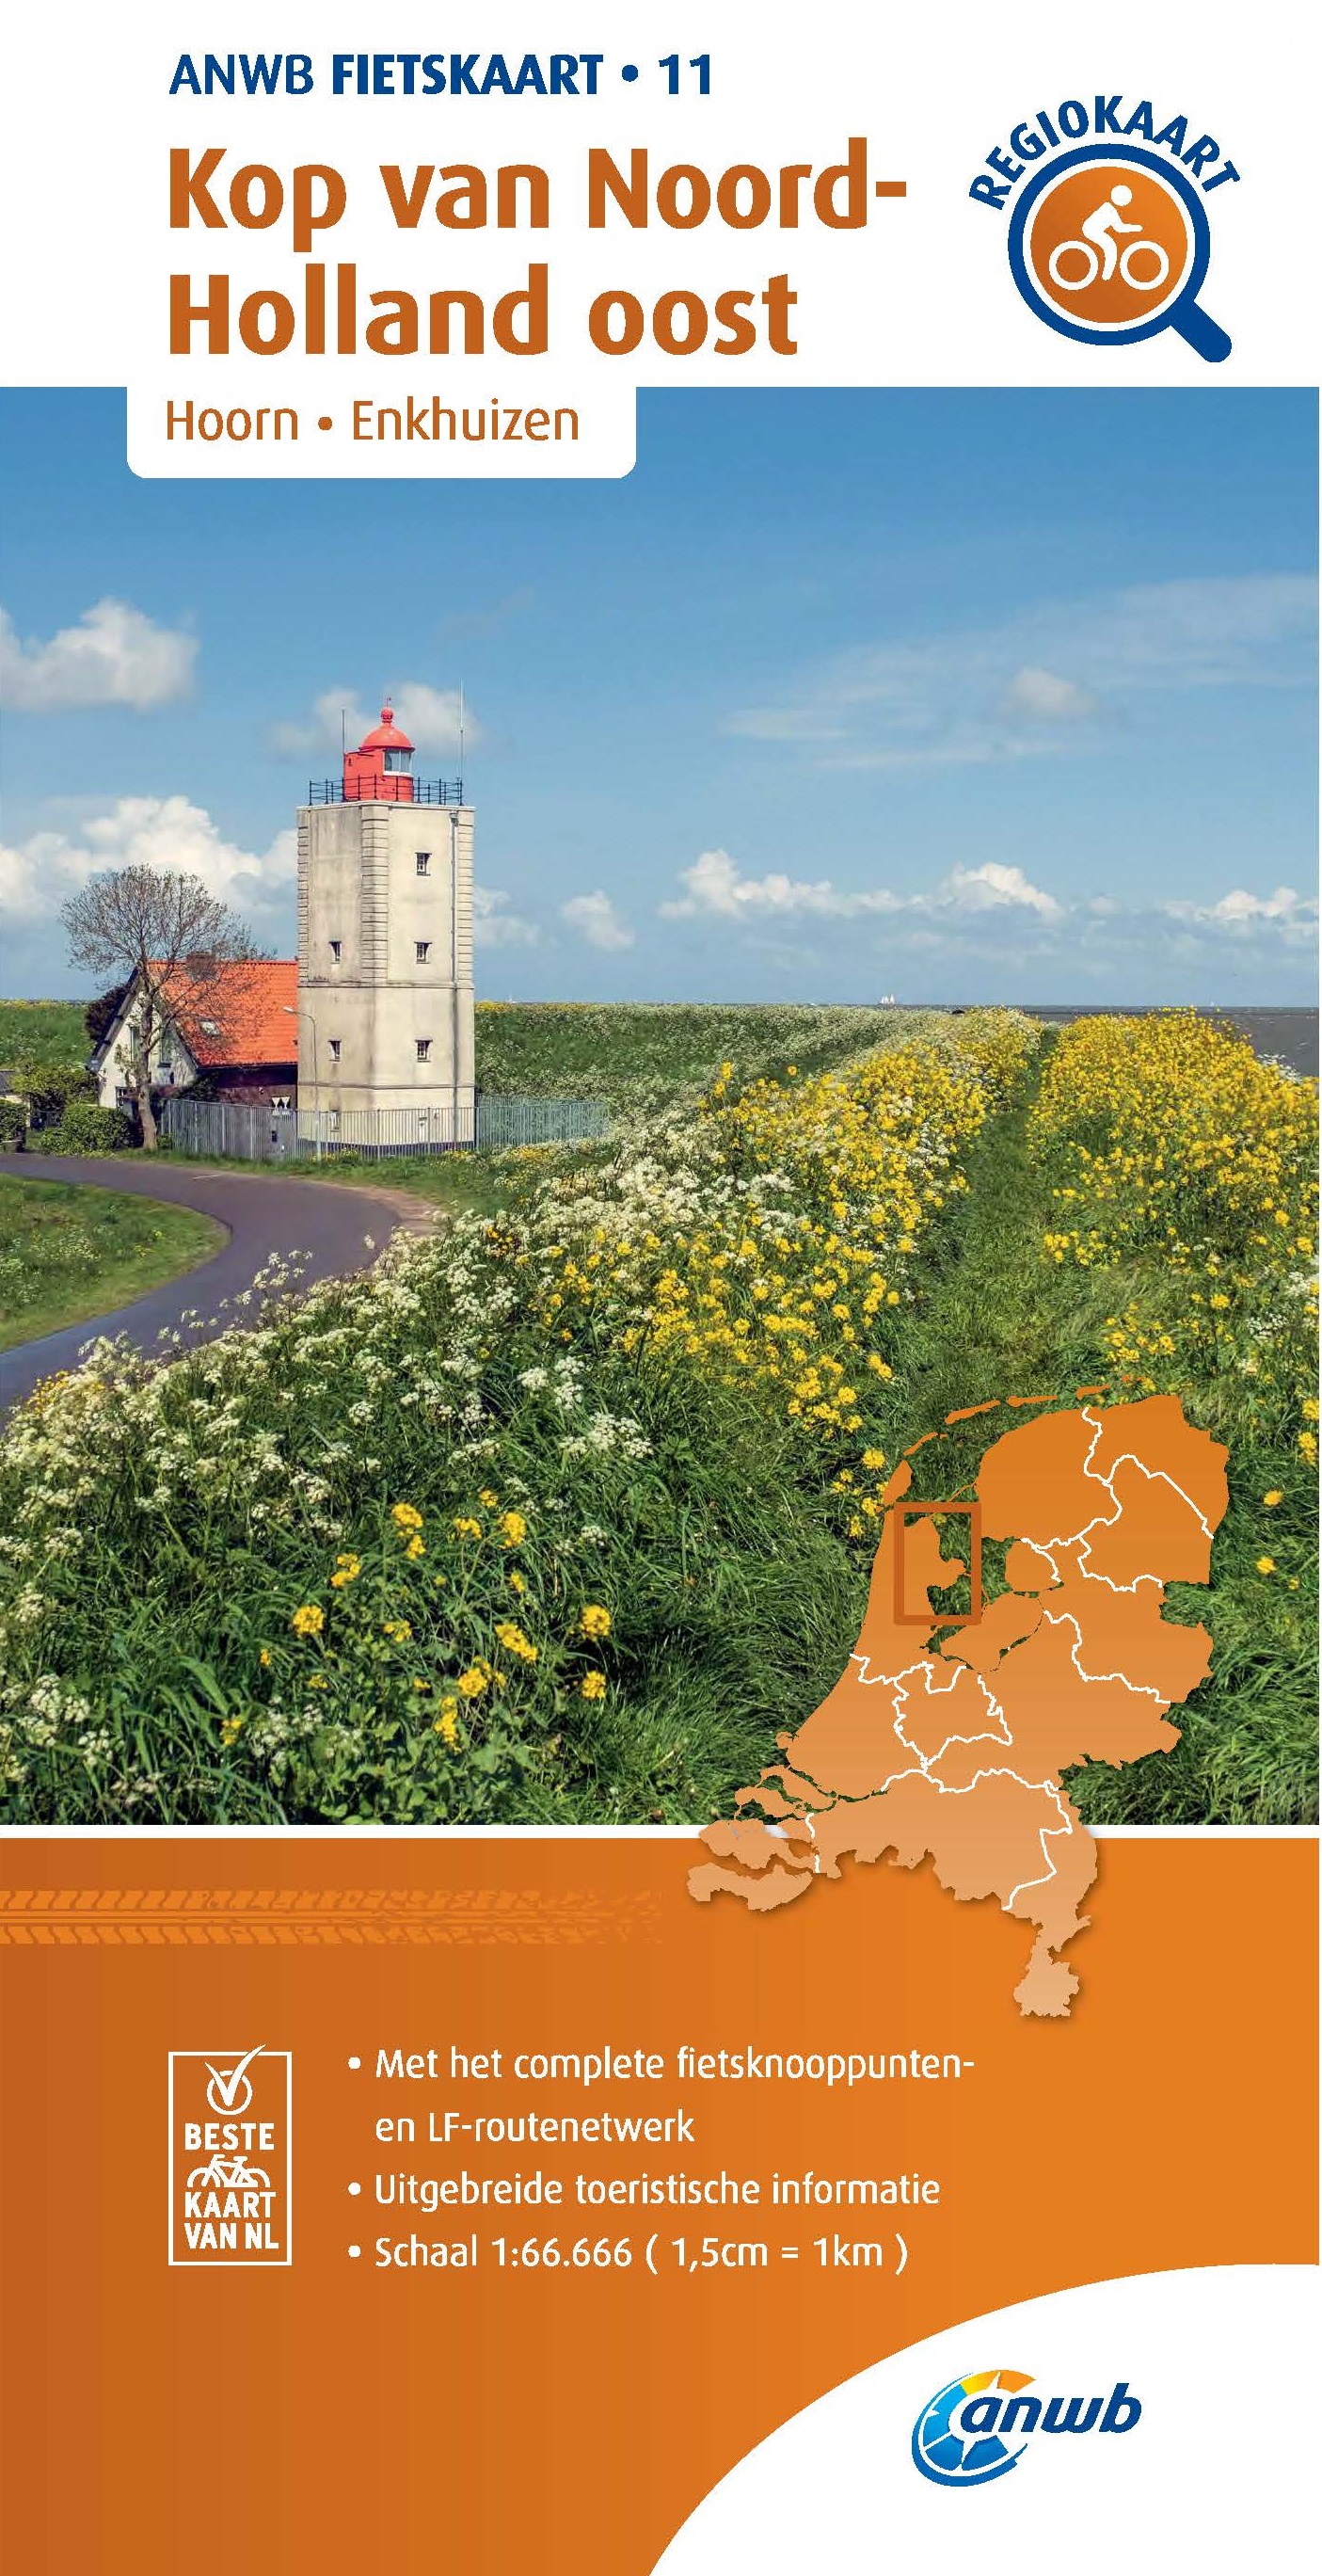 Online bestellen: Fietskaart 11 Regio Fietskaart Kop van Noord-Holland oost | ANWB Media